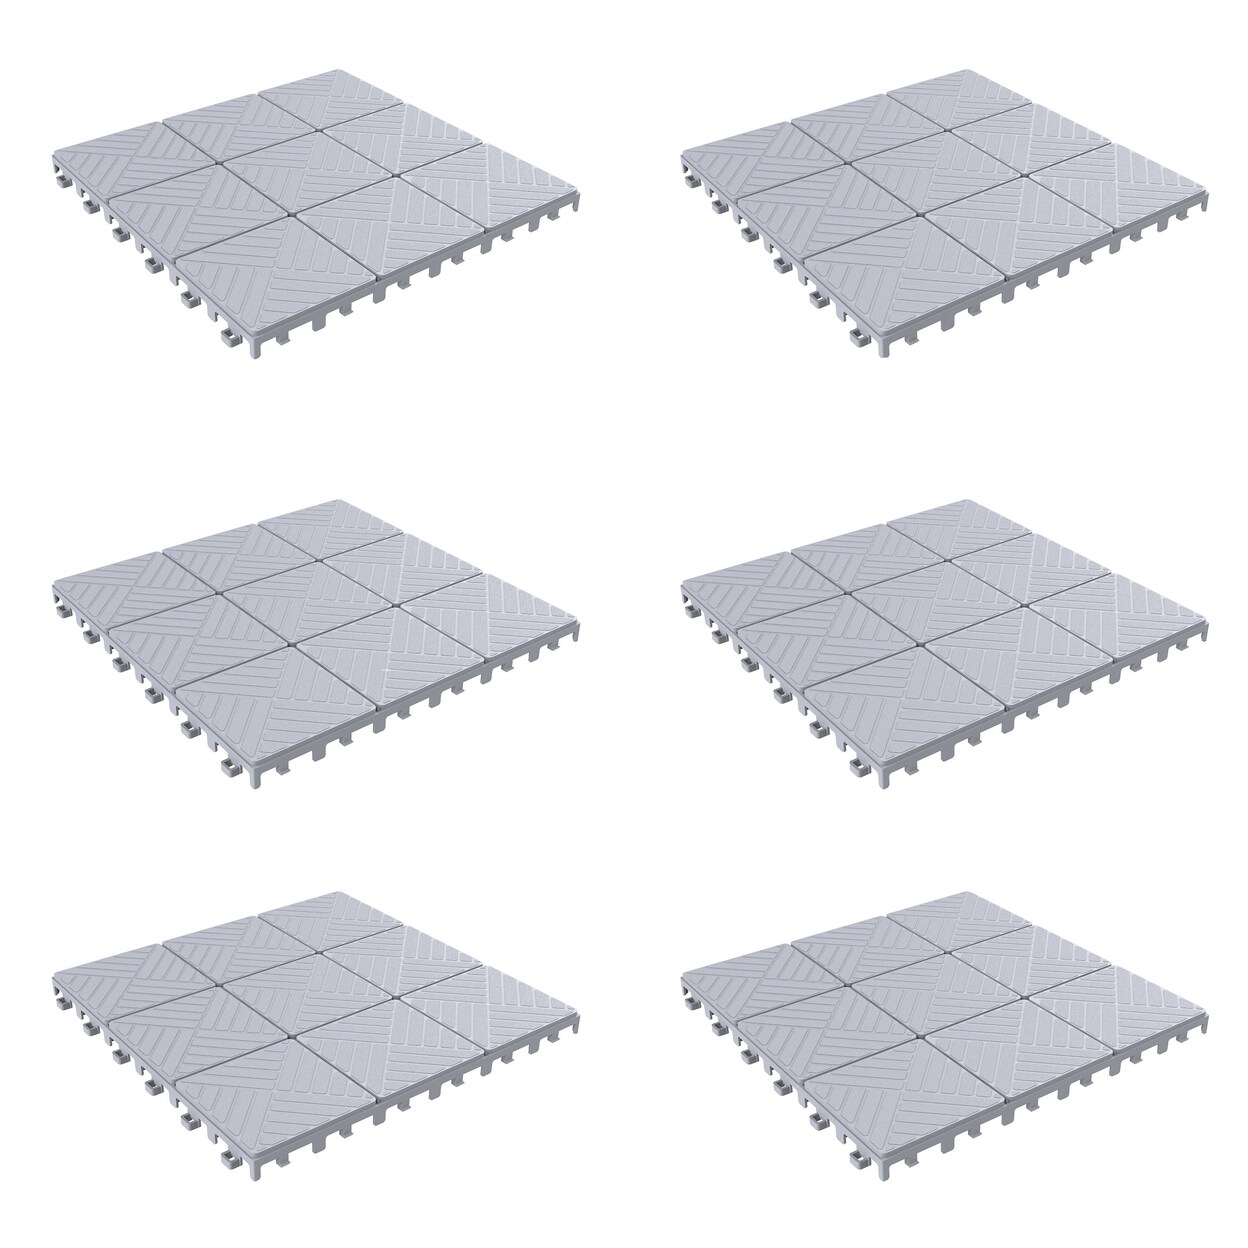 Pure Garden Outdoor Patio Easy Snap Tiles 11.5 x 11.5 Set of 6 Water Drainage Huge Lot